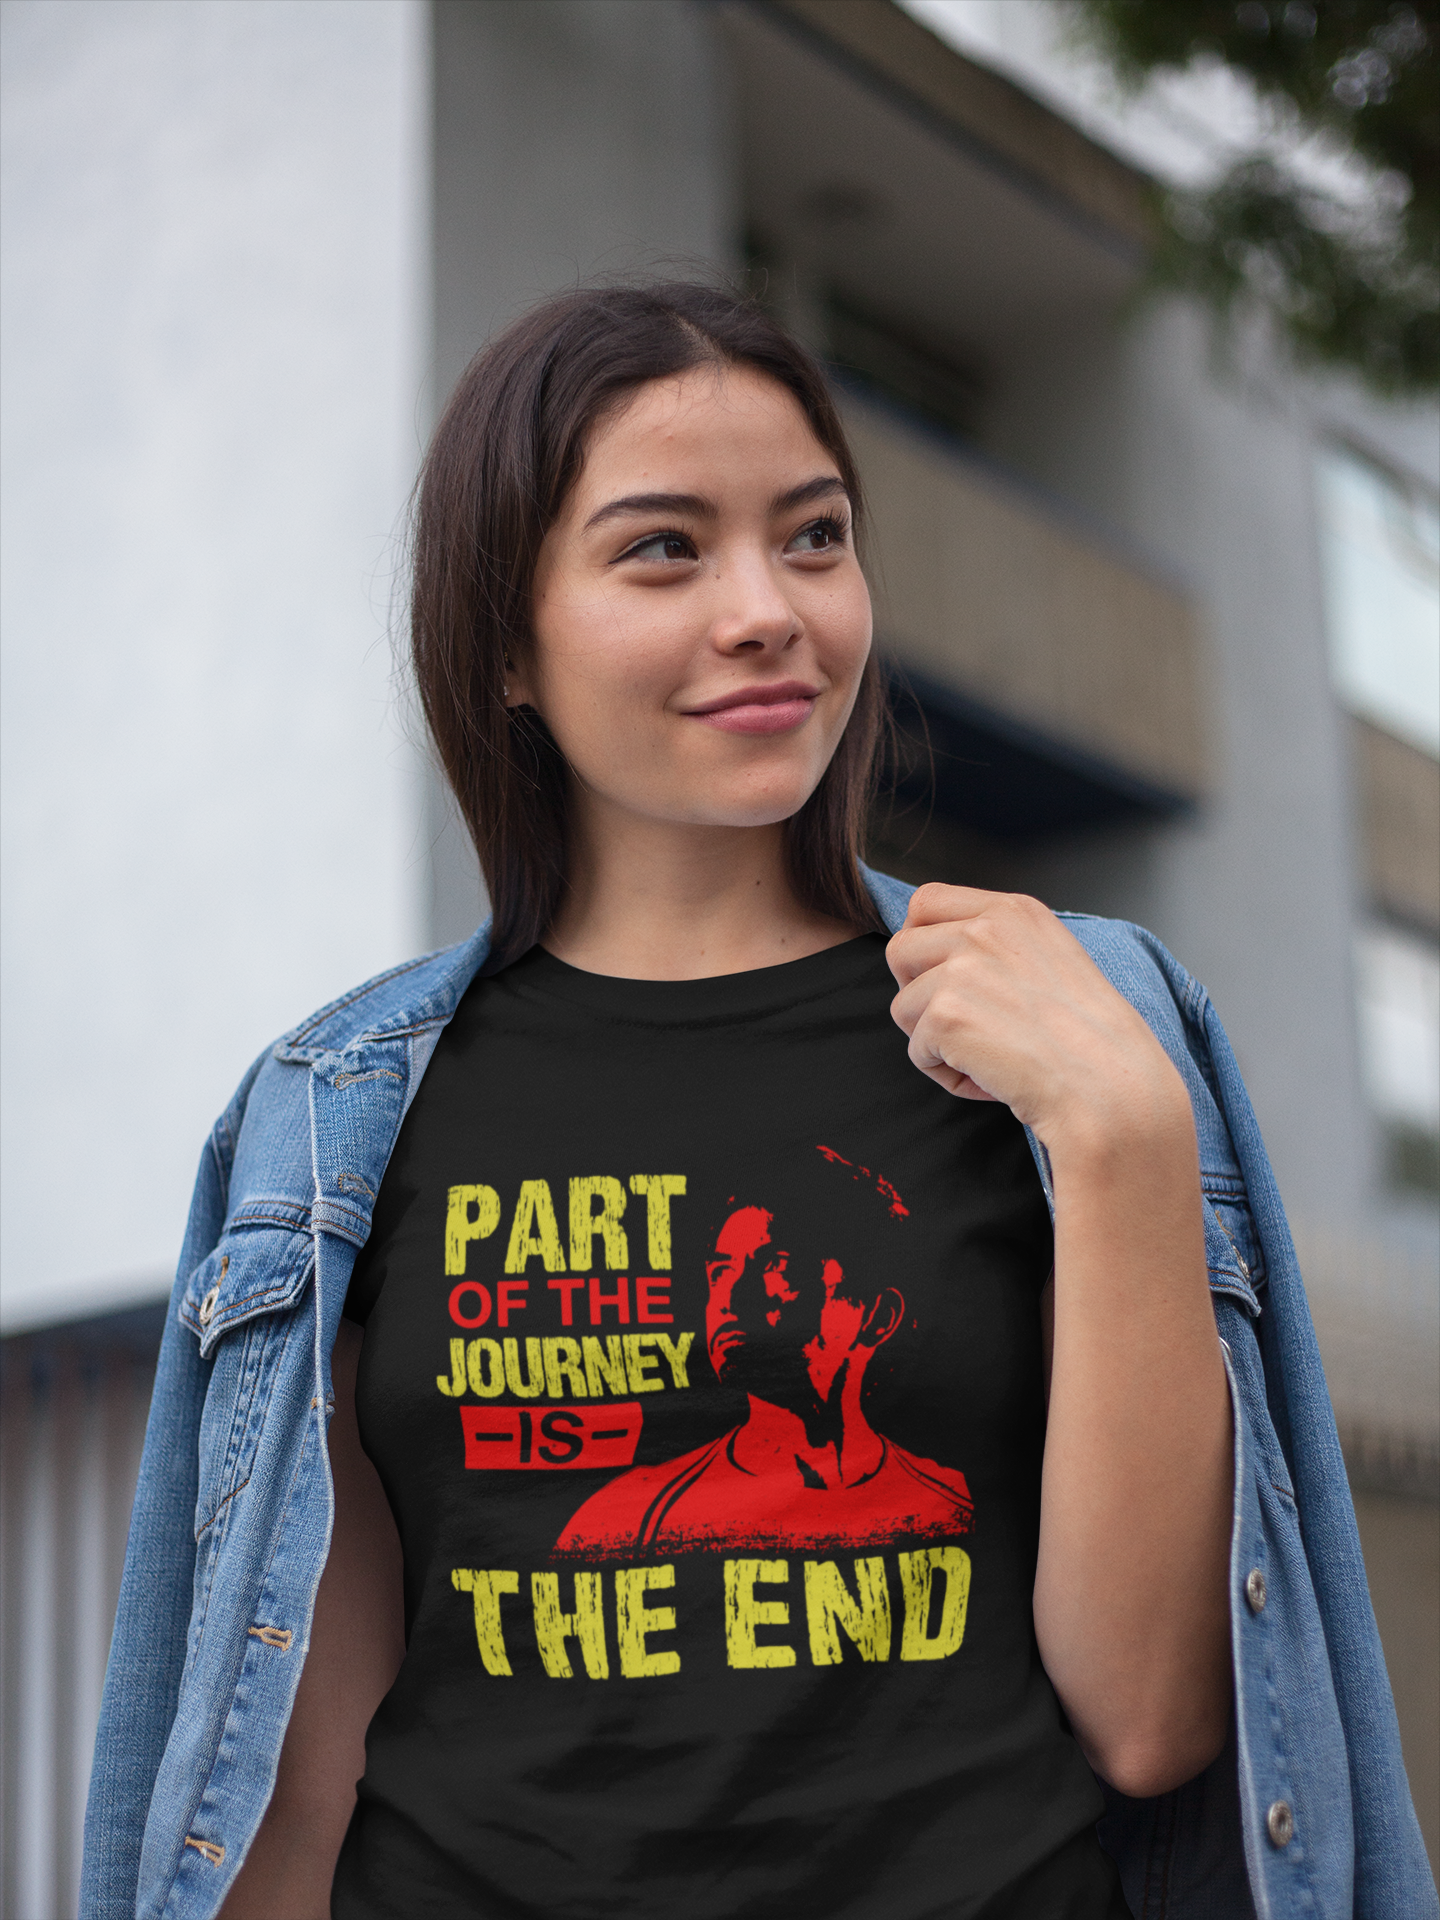 TNH - Women's Round Neck Tshirt - Iron Man - Journey